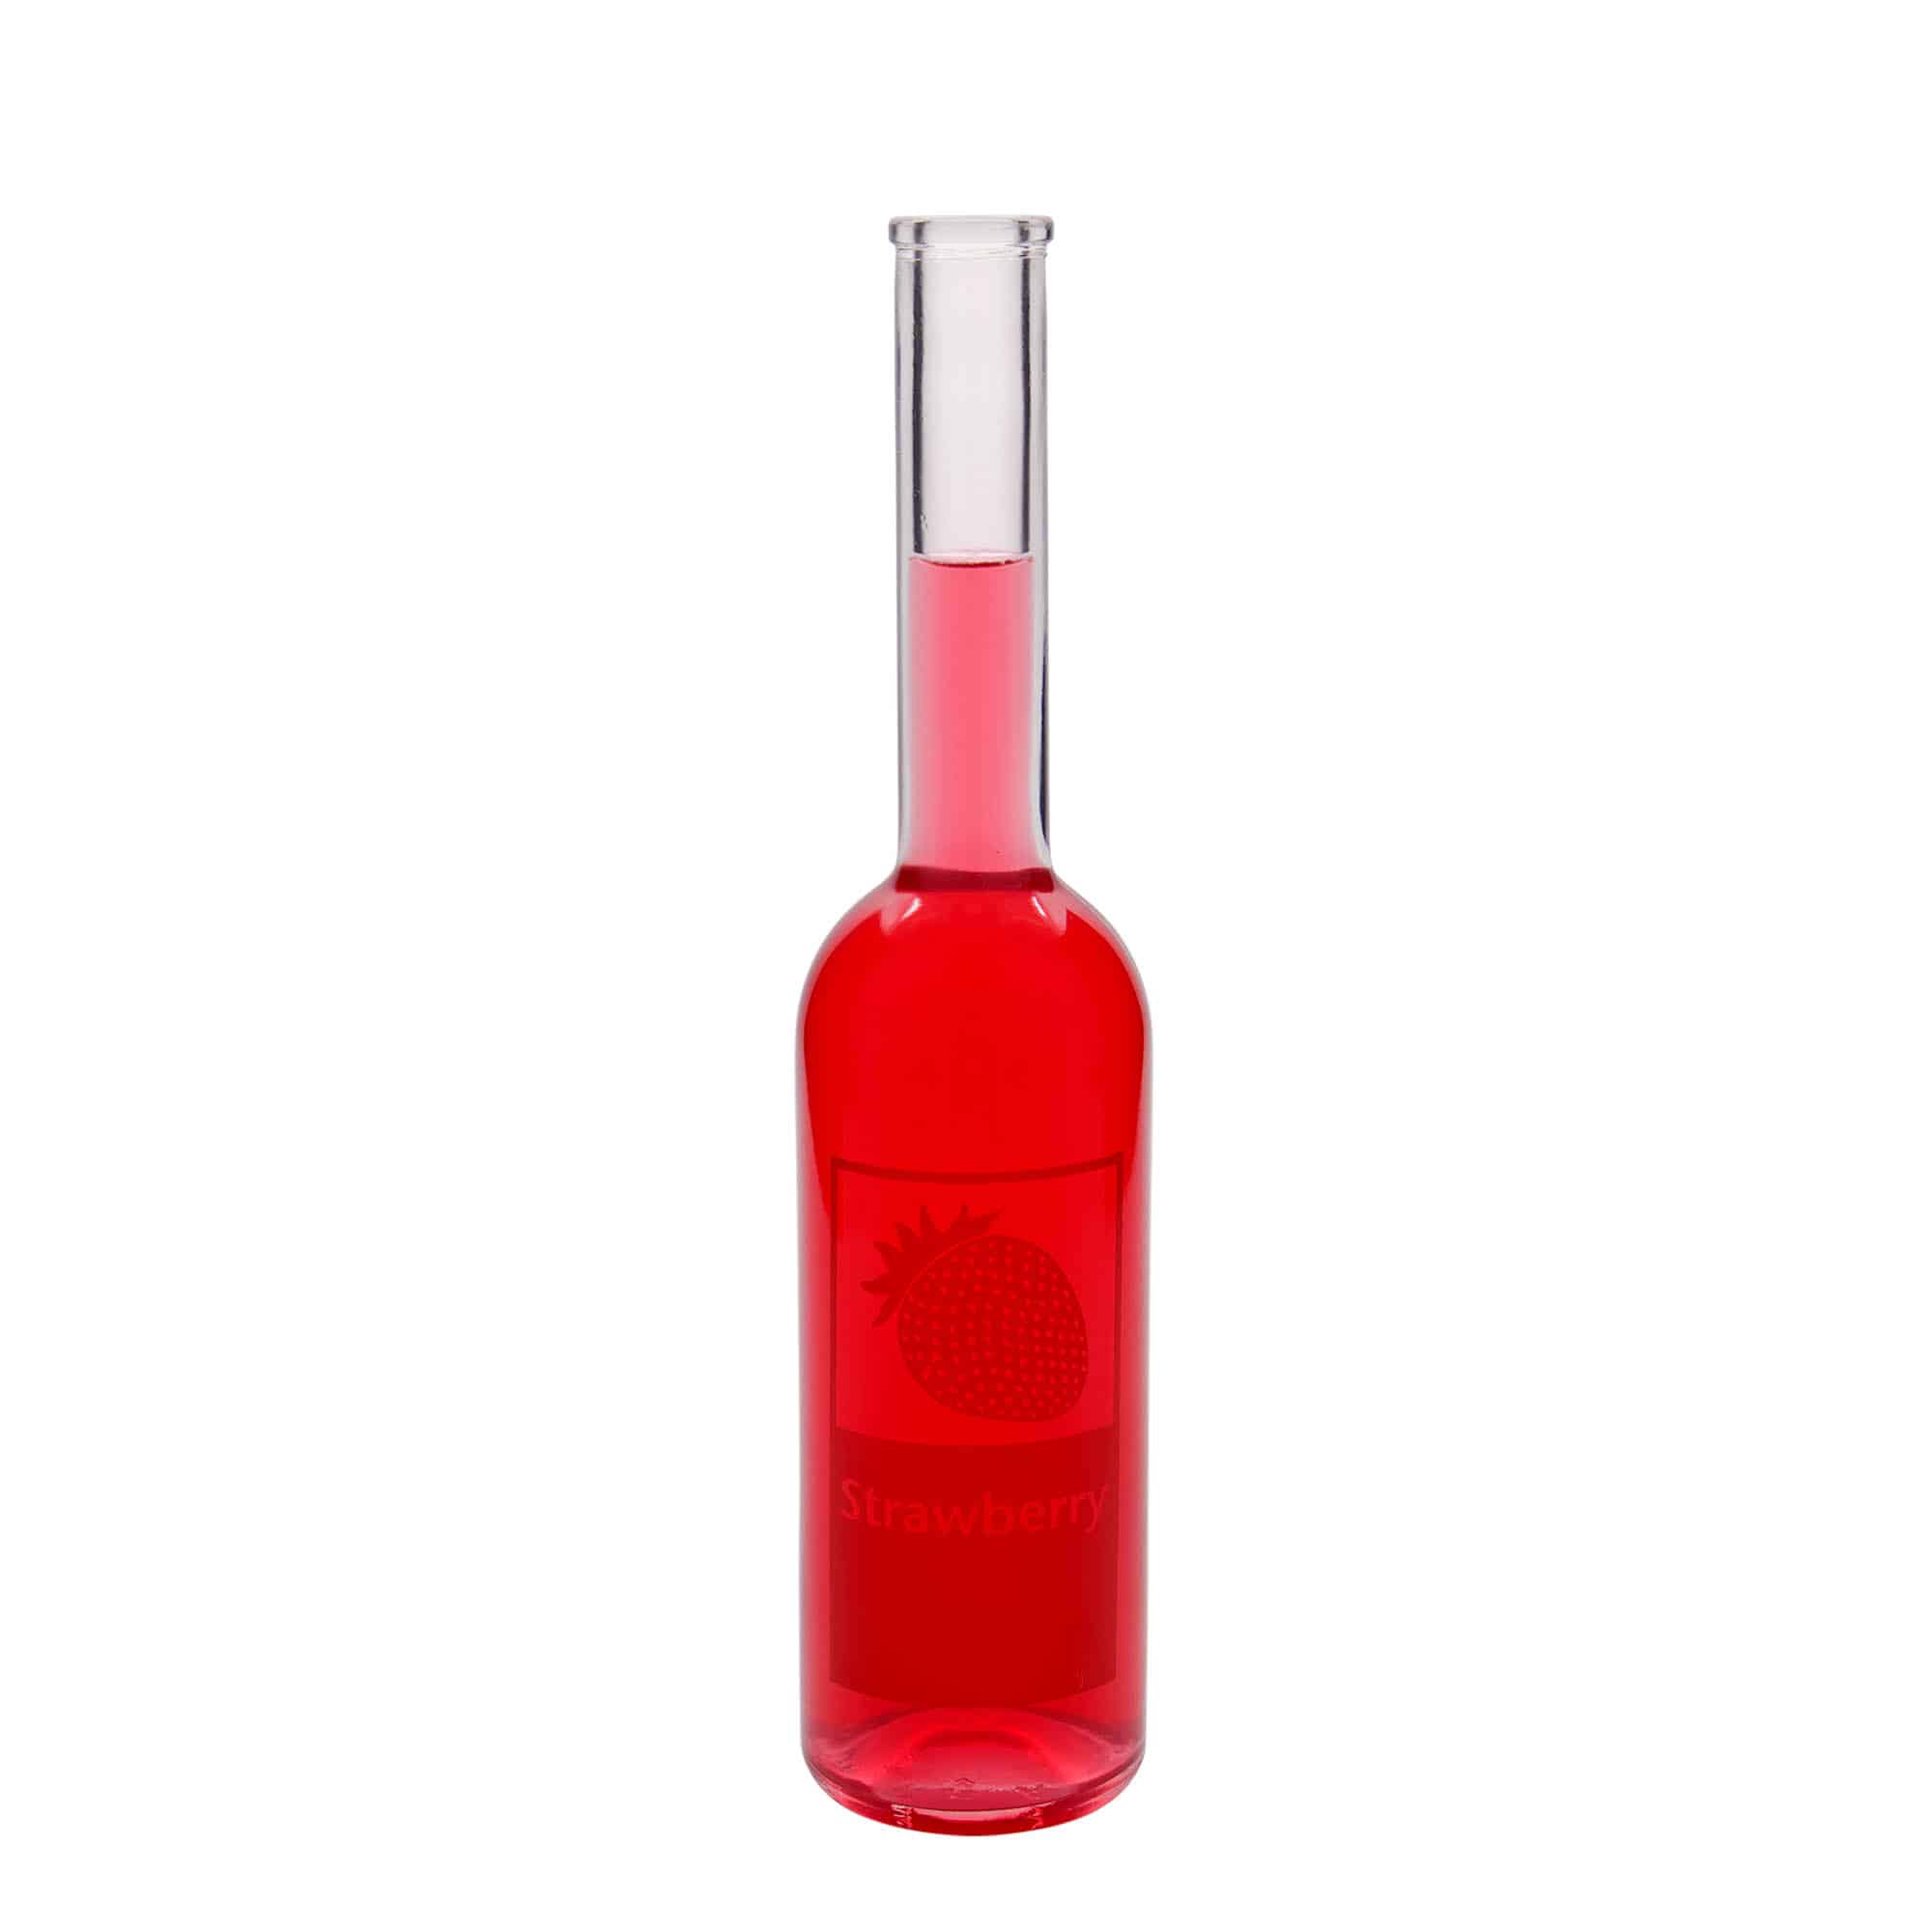 500 ml glass bottle 'Opera', print: Strawberry, closure: cork